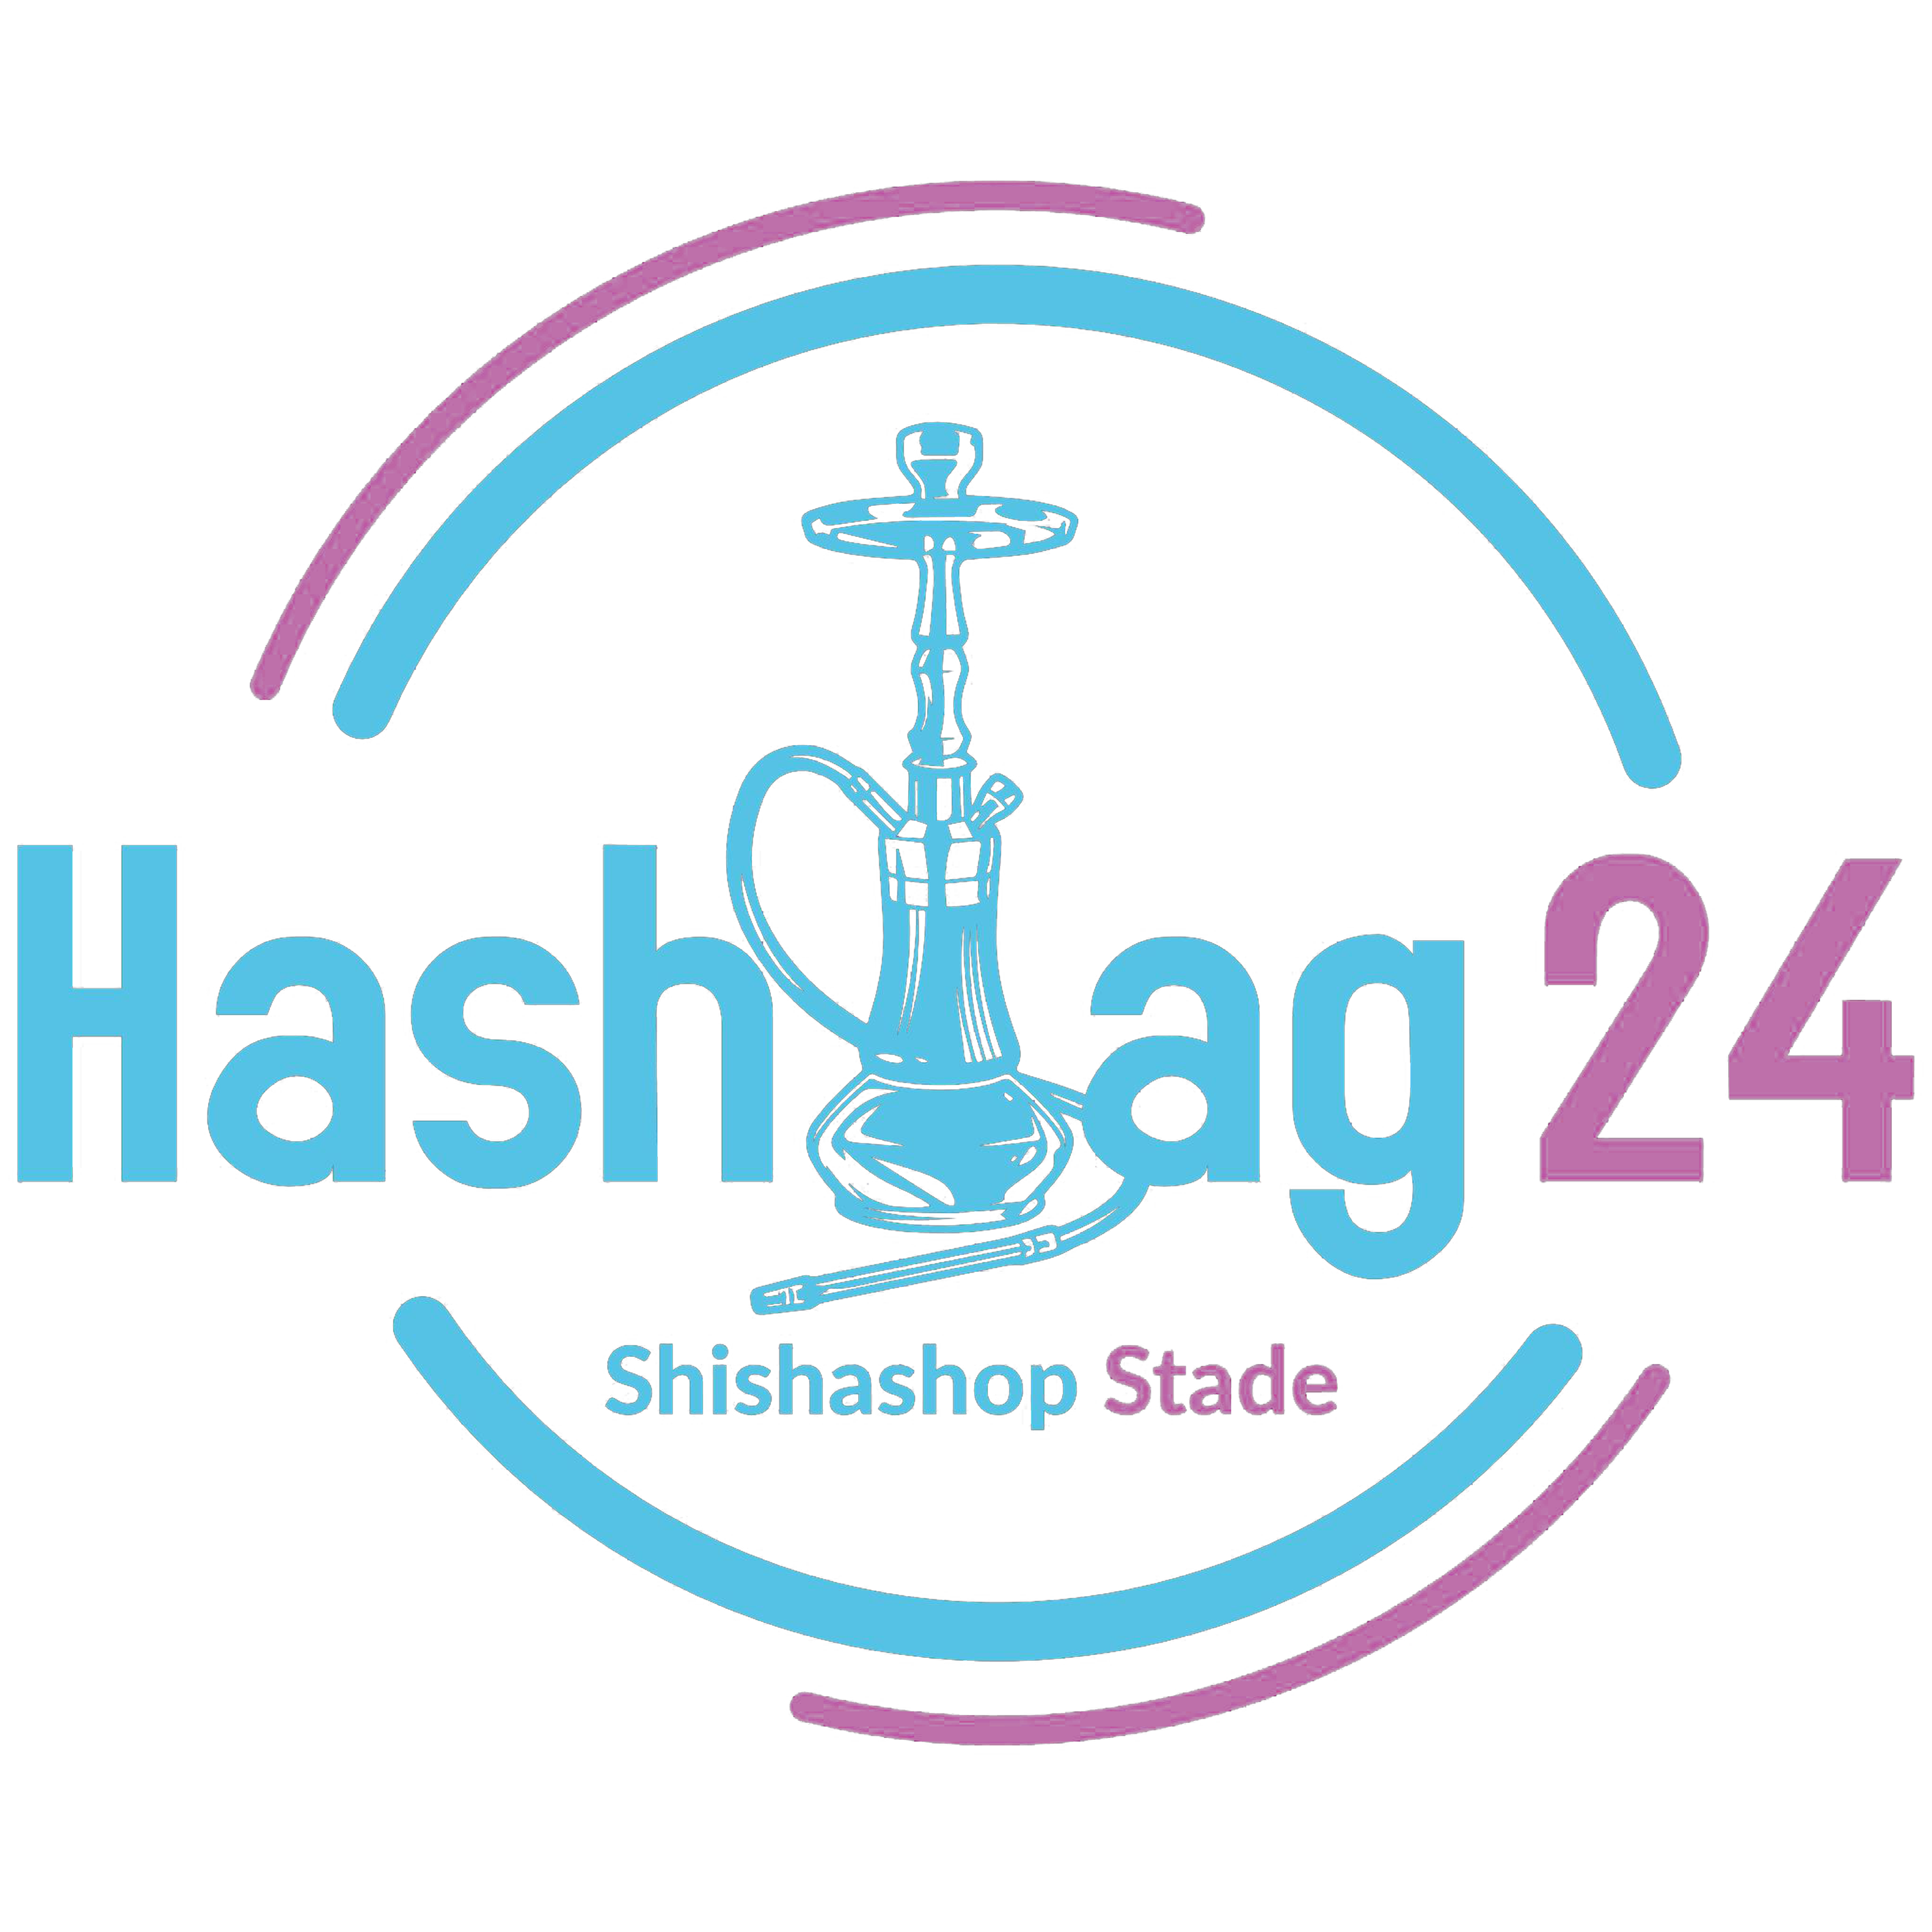 Hashtag24